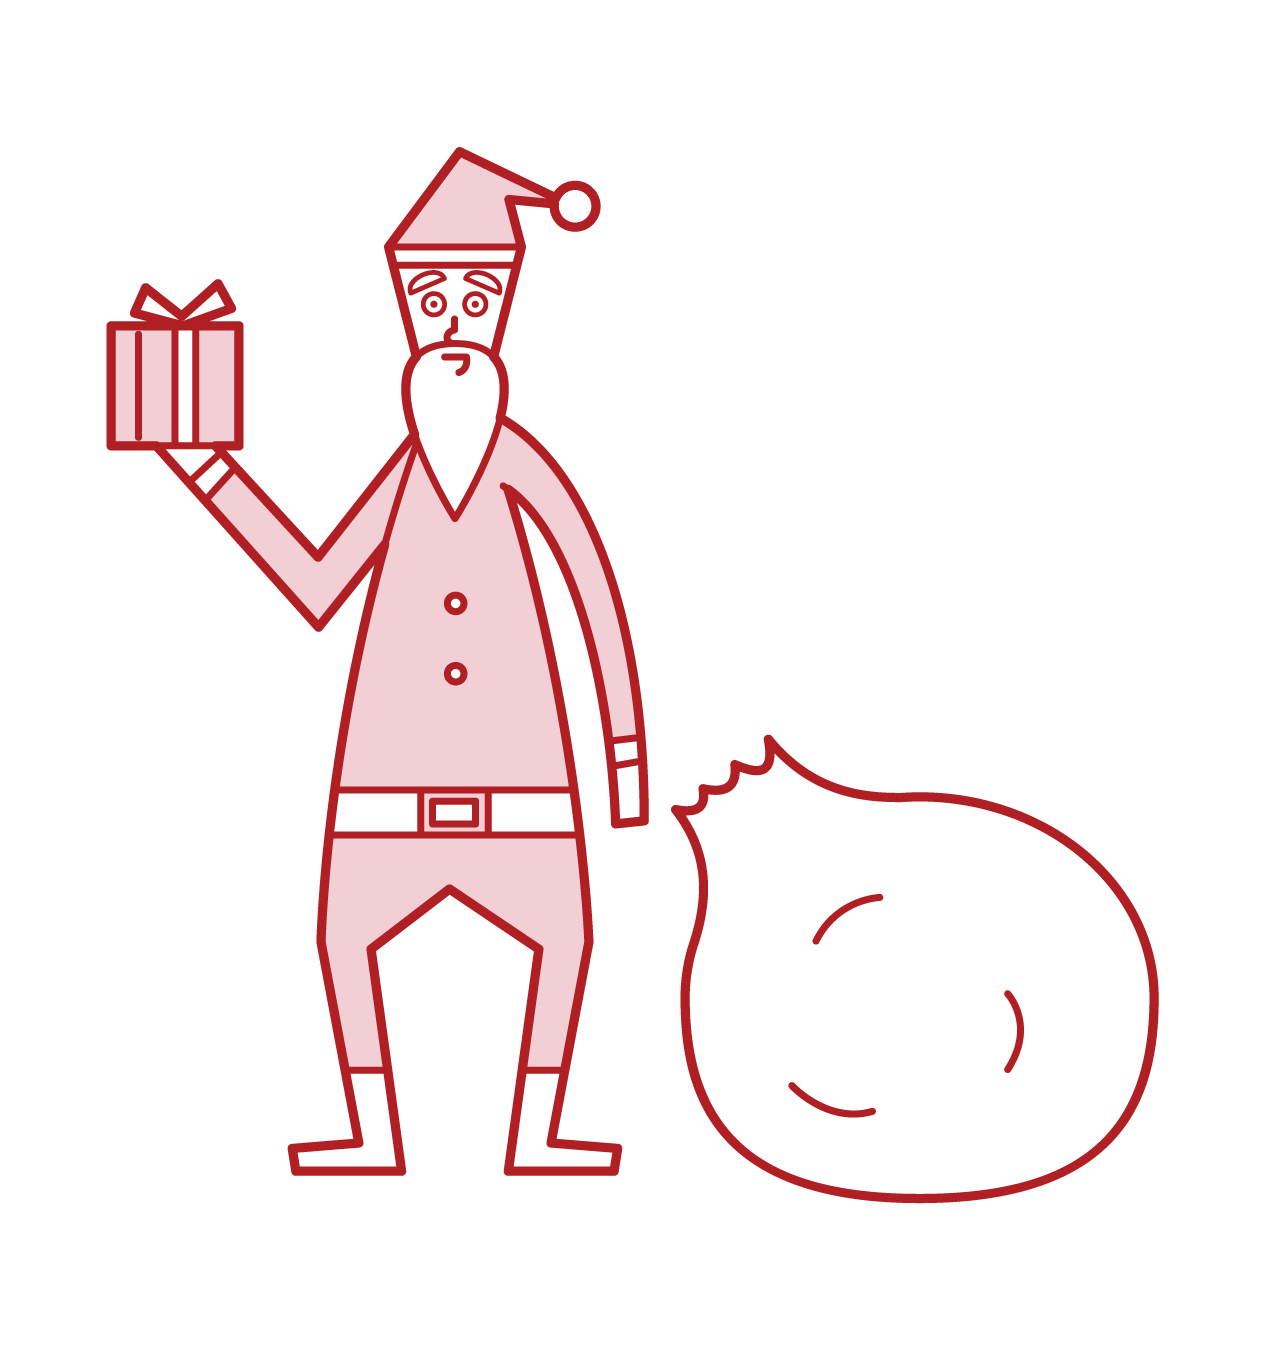 Illustration of Santa Claus passing a present